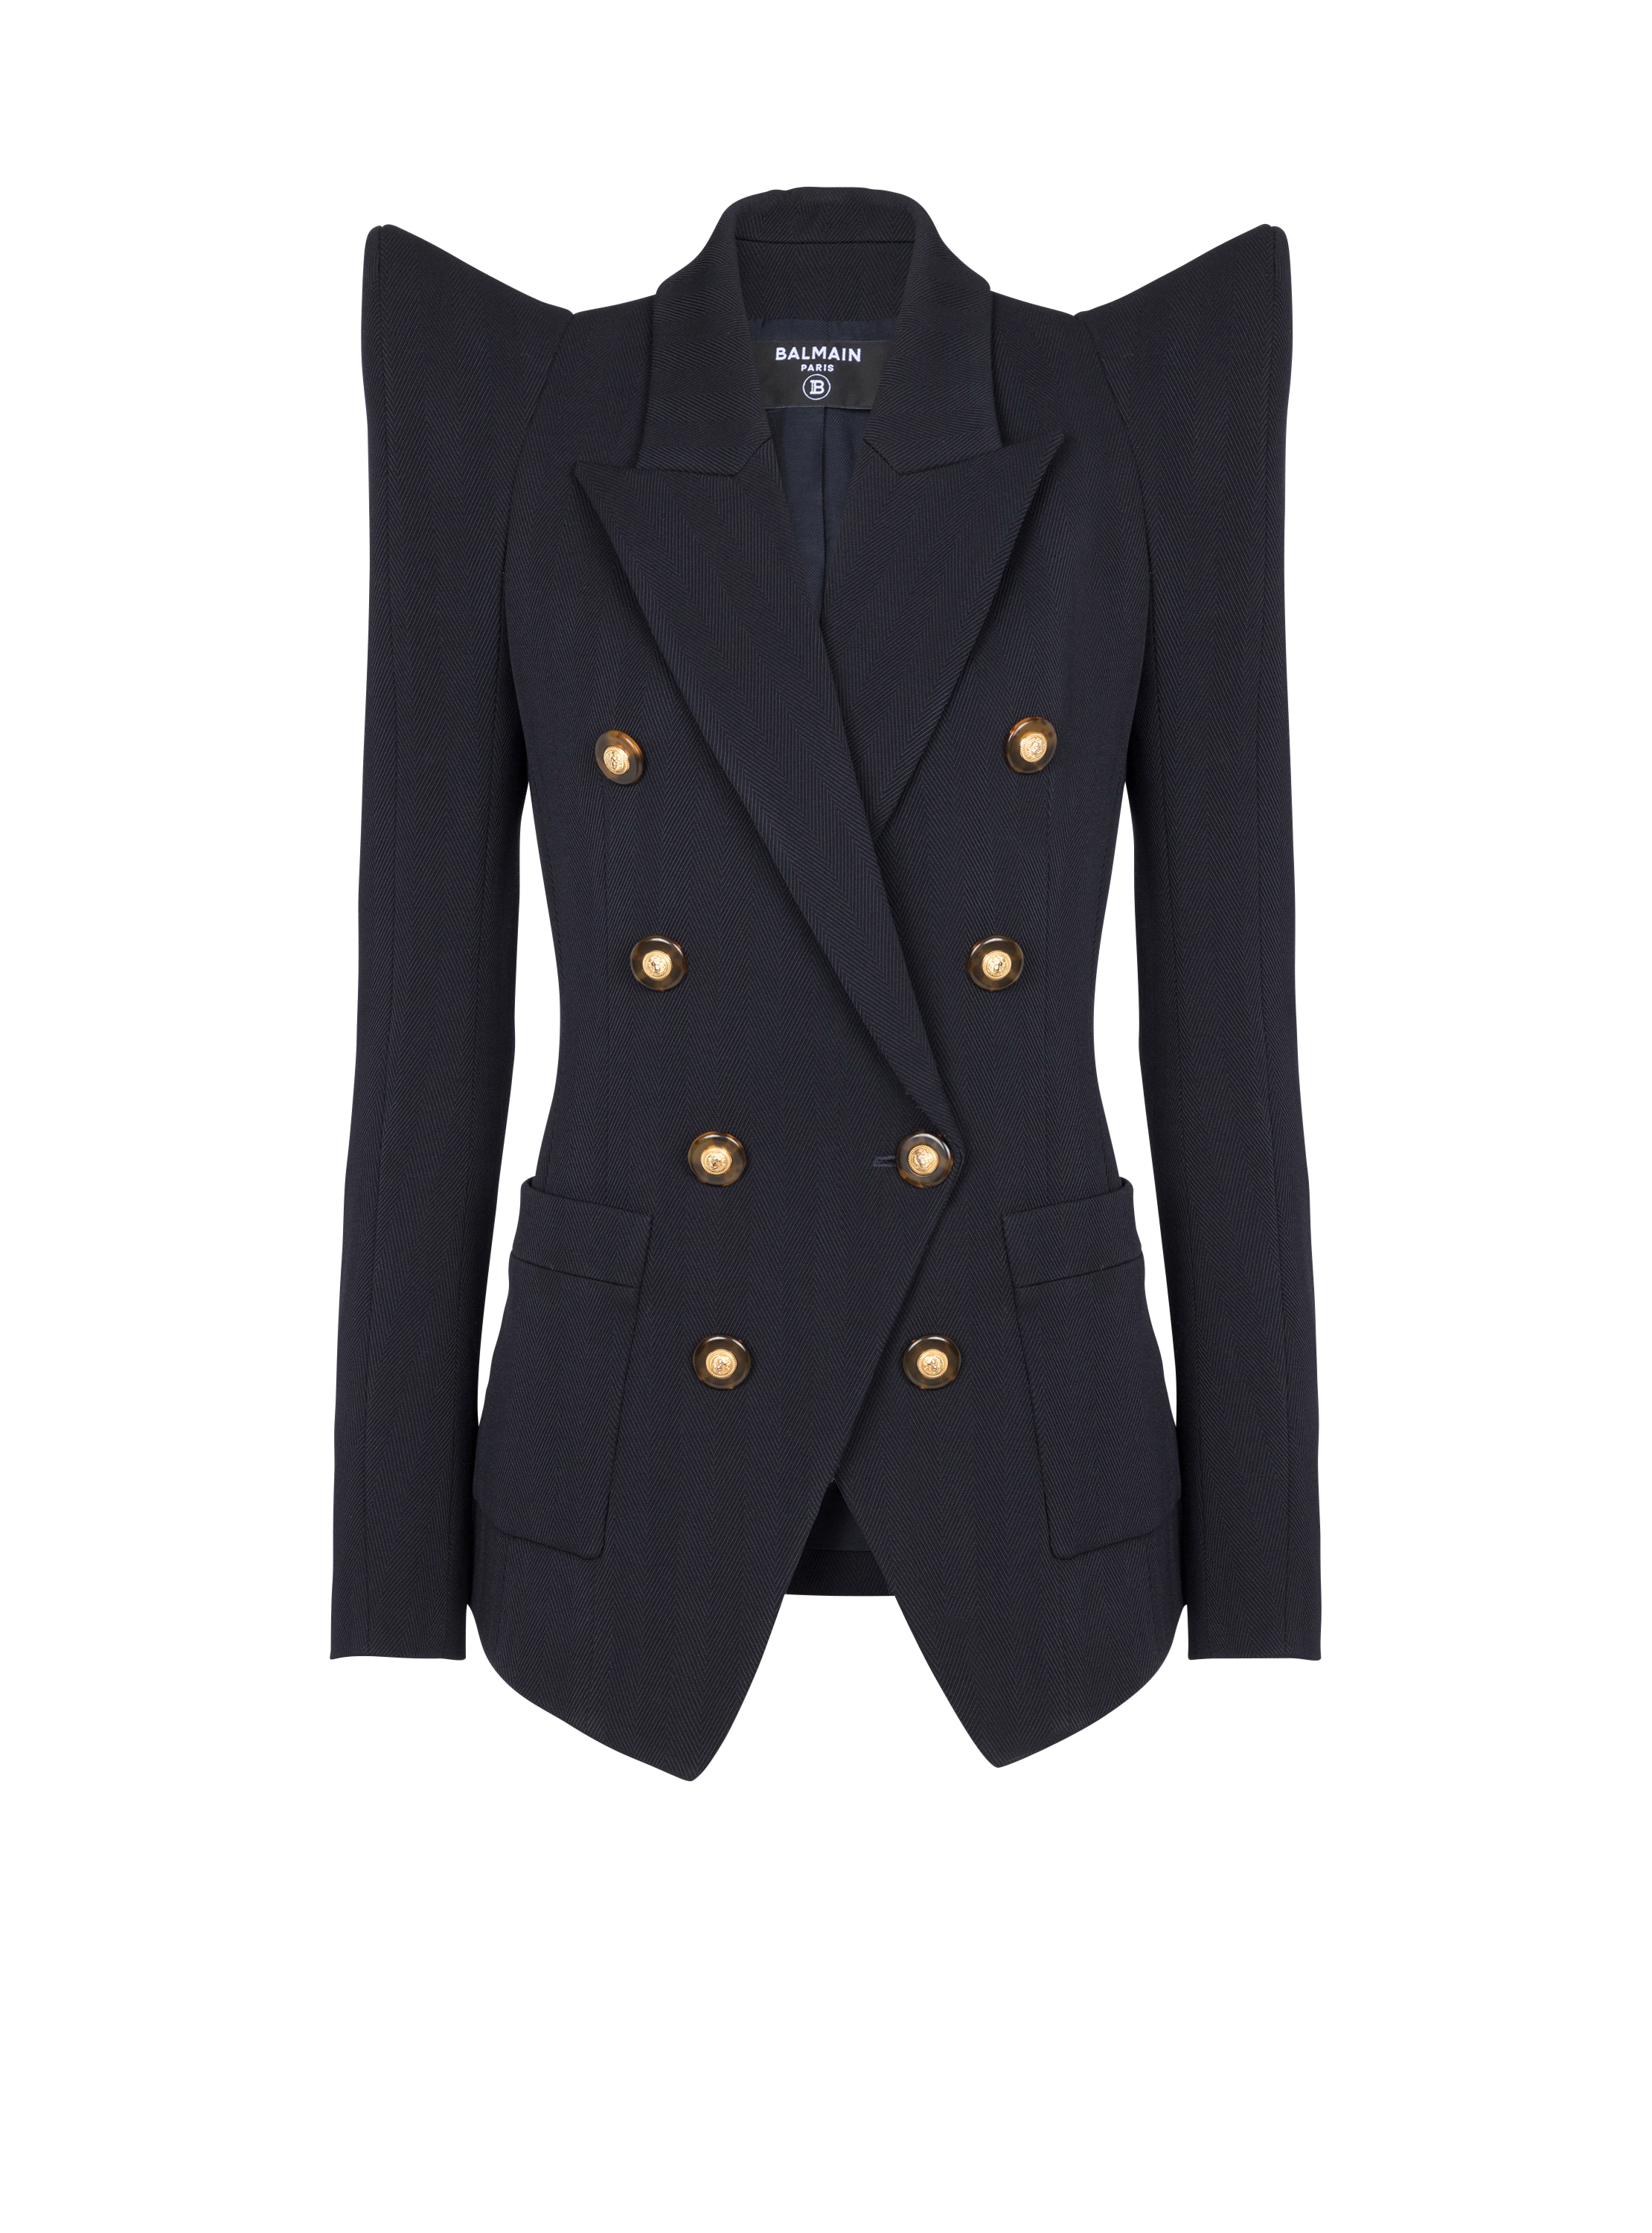 8-button structured jacket